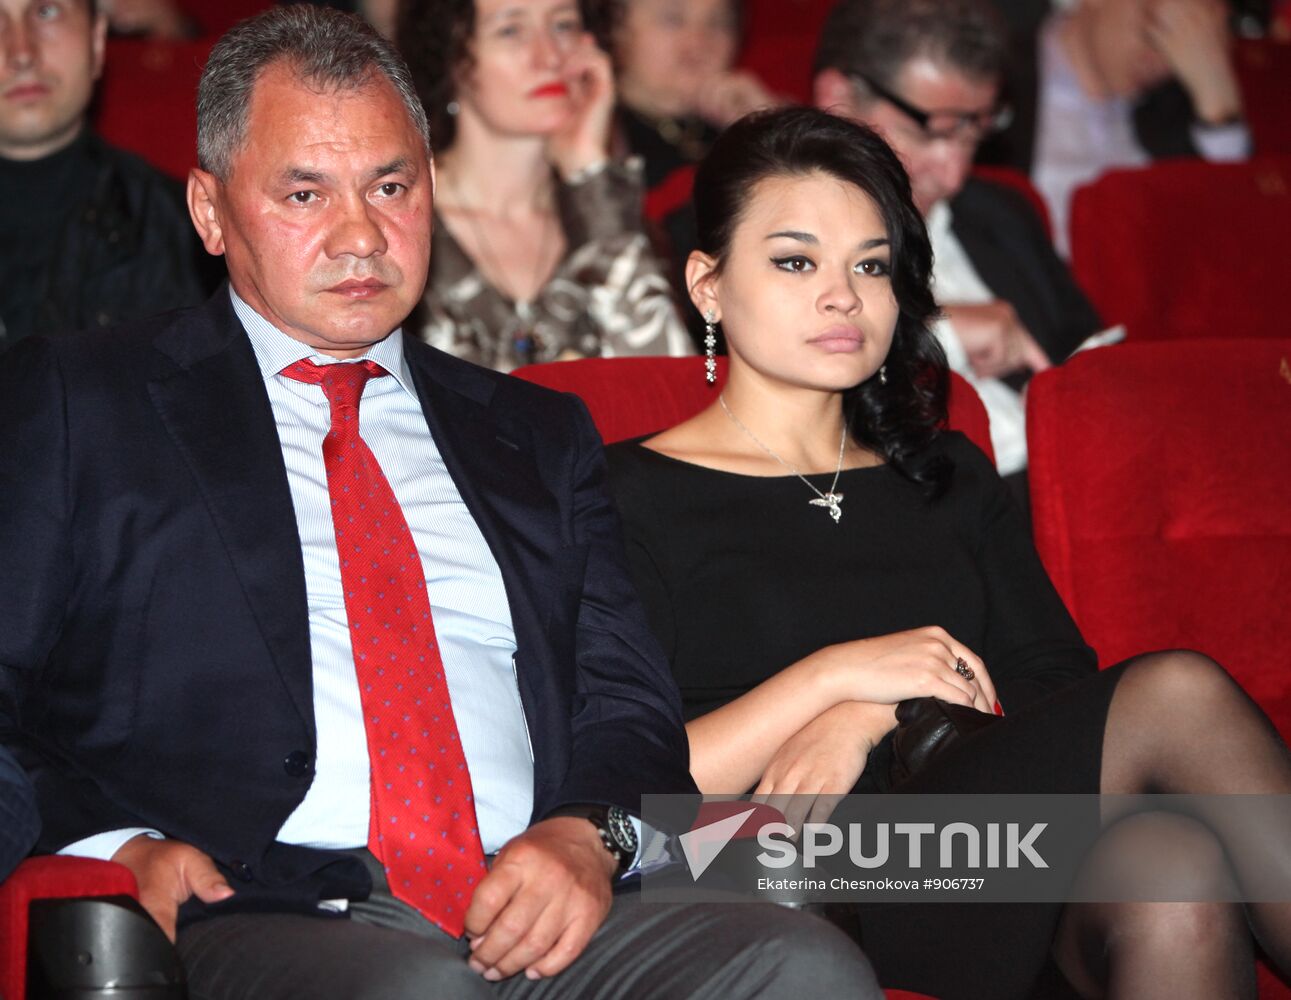 Sergei Shoigu with his daughter Ksenia